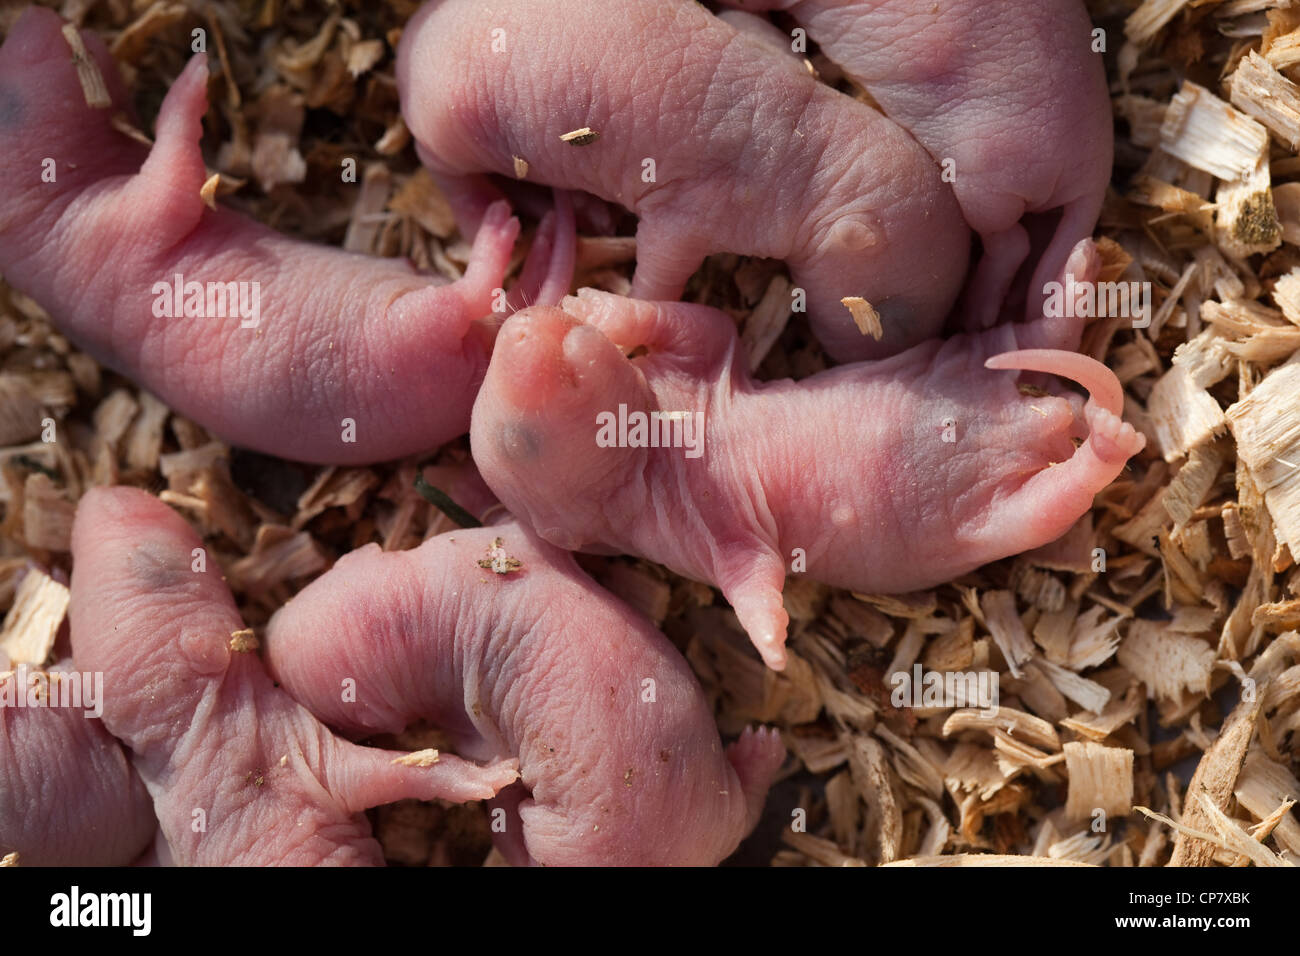 Brown Rats (Rattus norvegicus). Day old pups or babies. Stock Photo